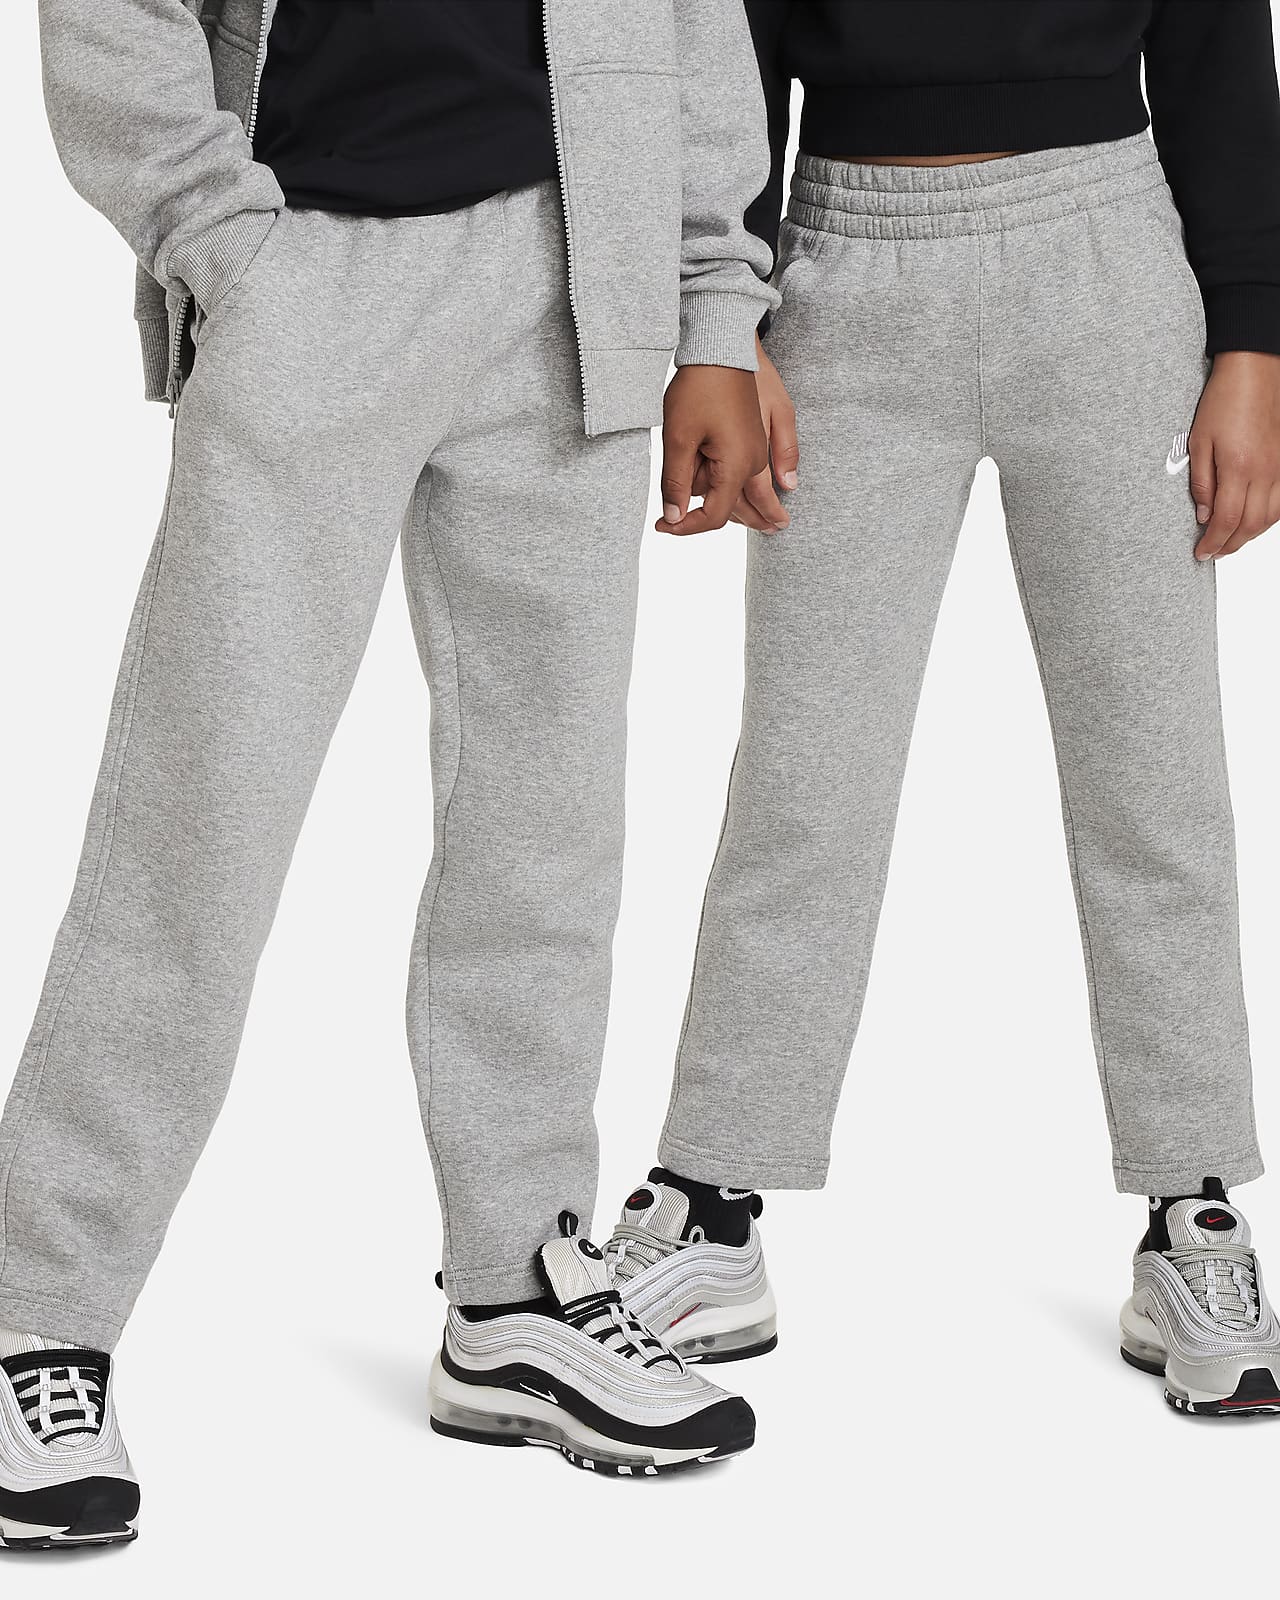 Nike Sportswear Tech Fleece Pants - College Grey/Black/Metallic Silver -  Bottoms - Mens Clothing